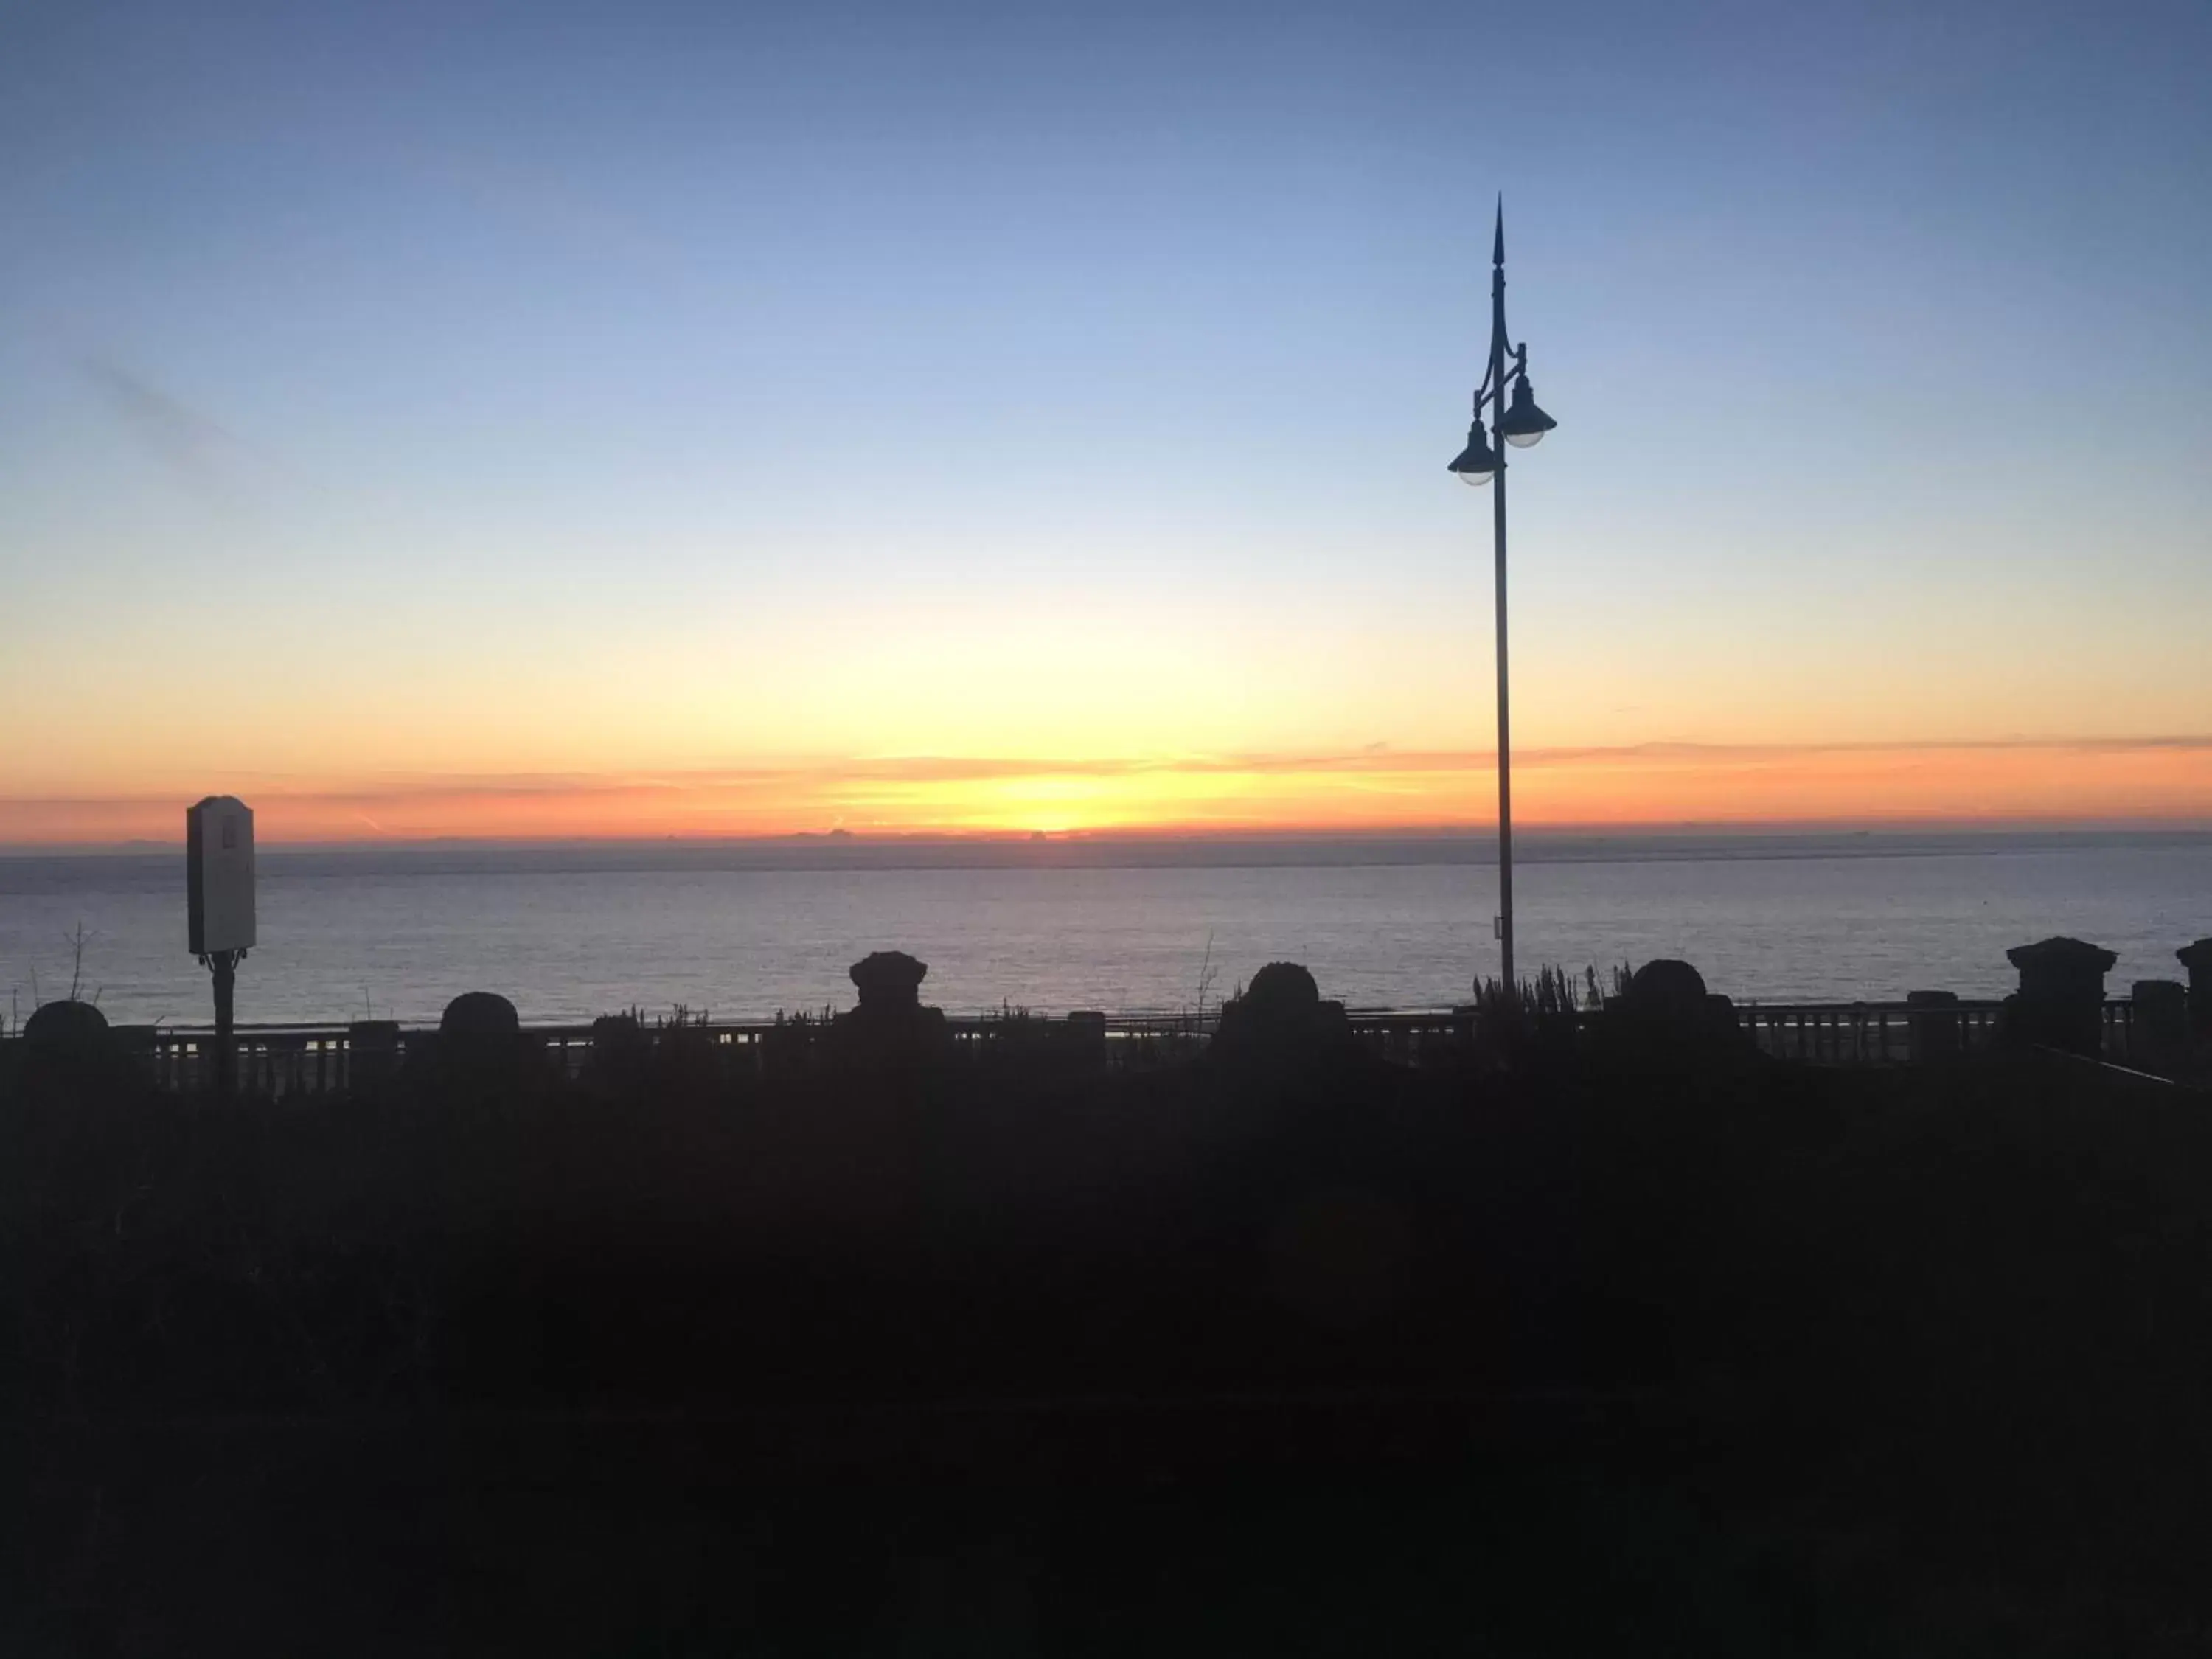 Sea view, Sunrise/Sunset in Hotel Victoria